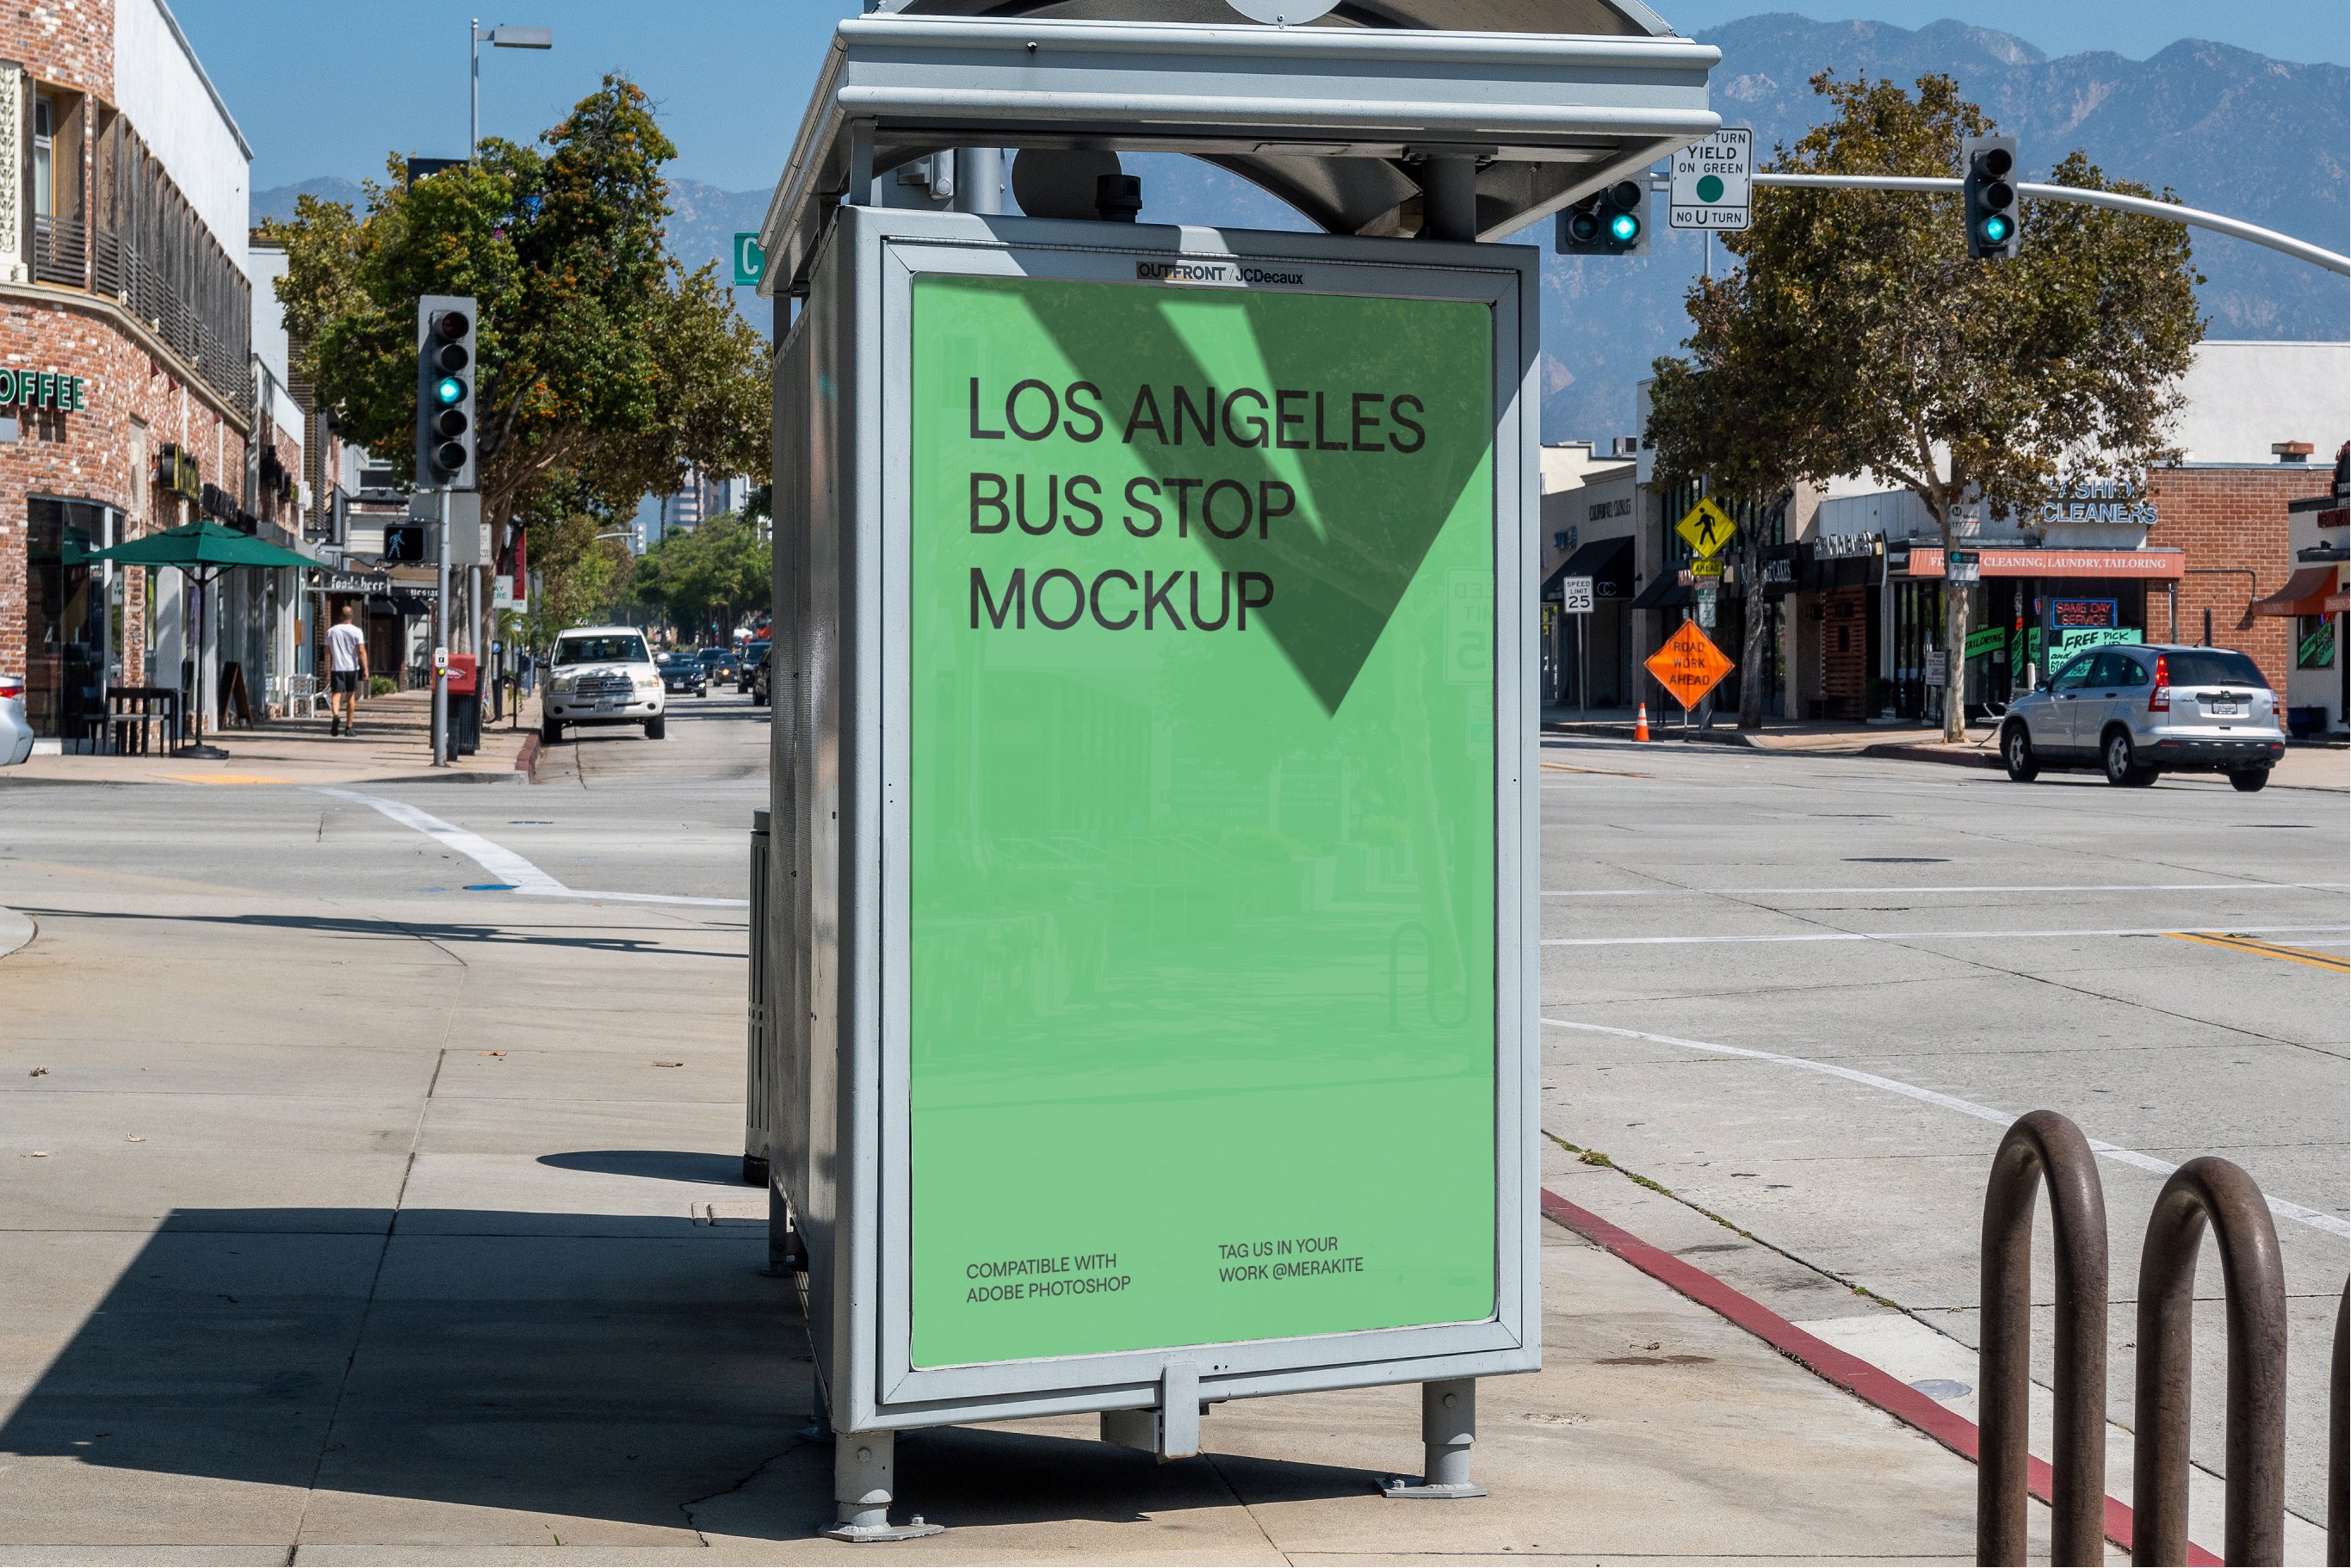 Urban Bus Stop Billboard Mockup PSD cover image.